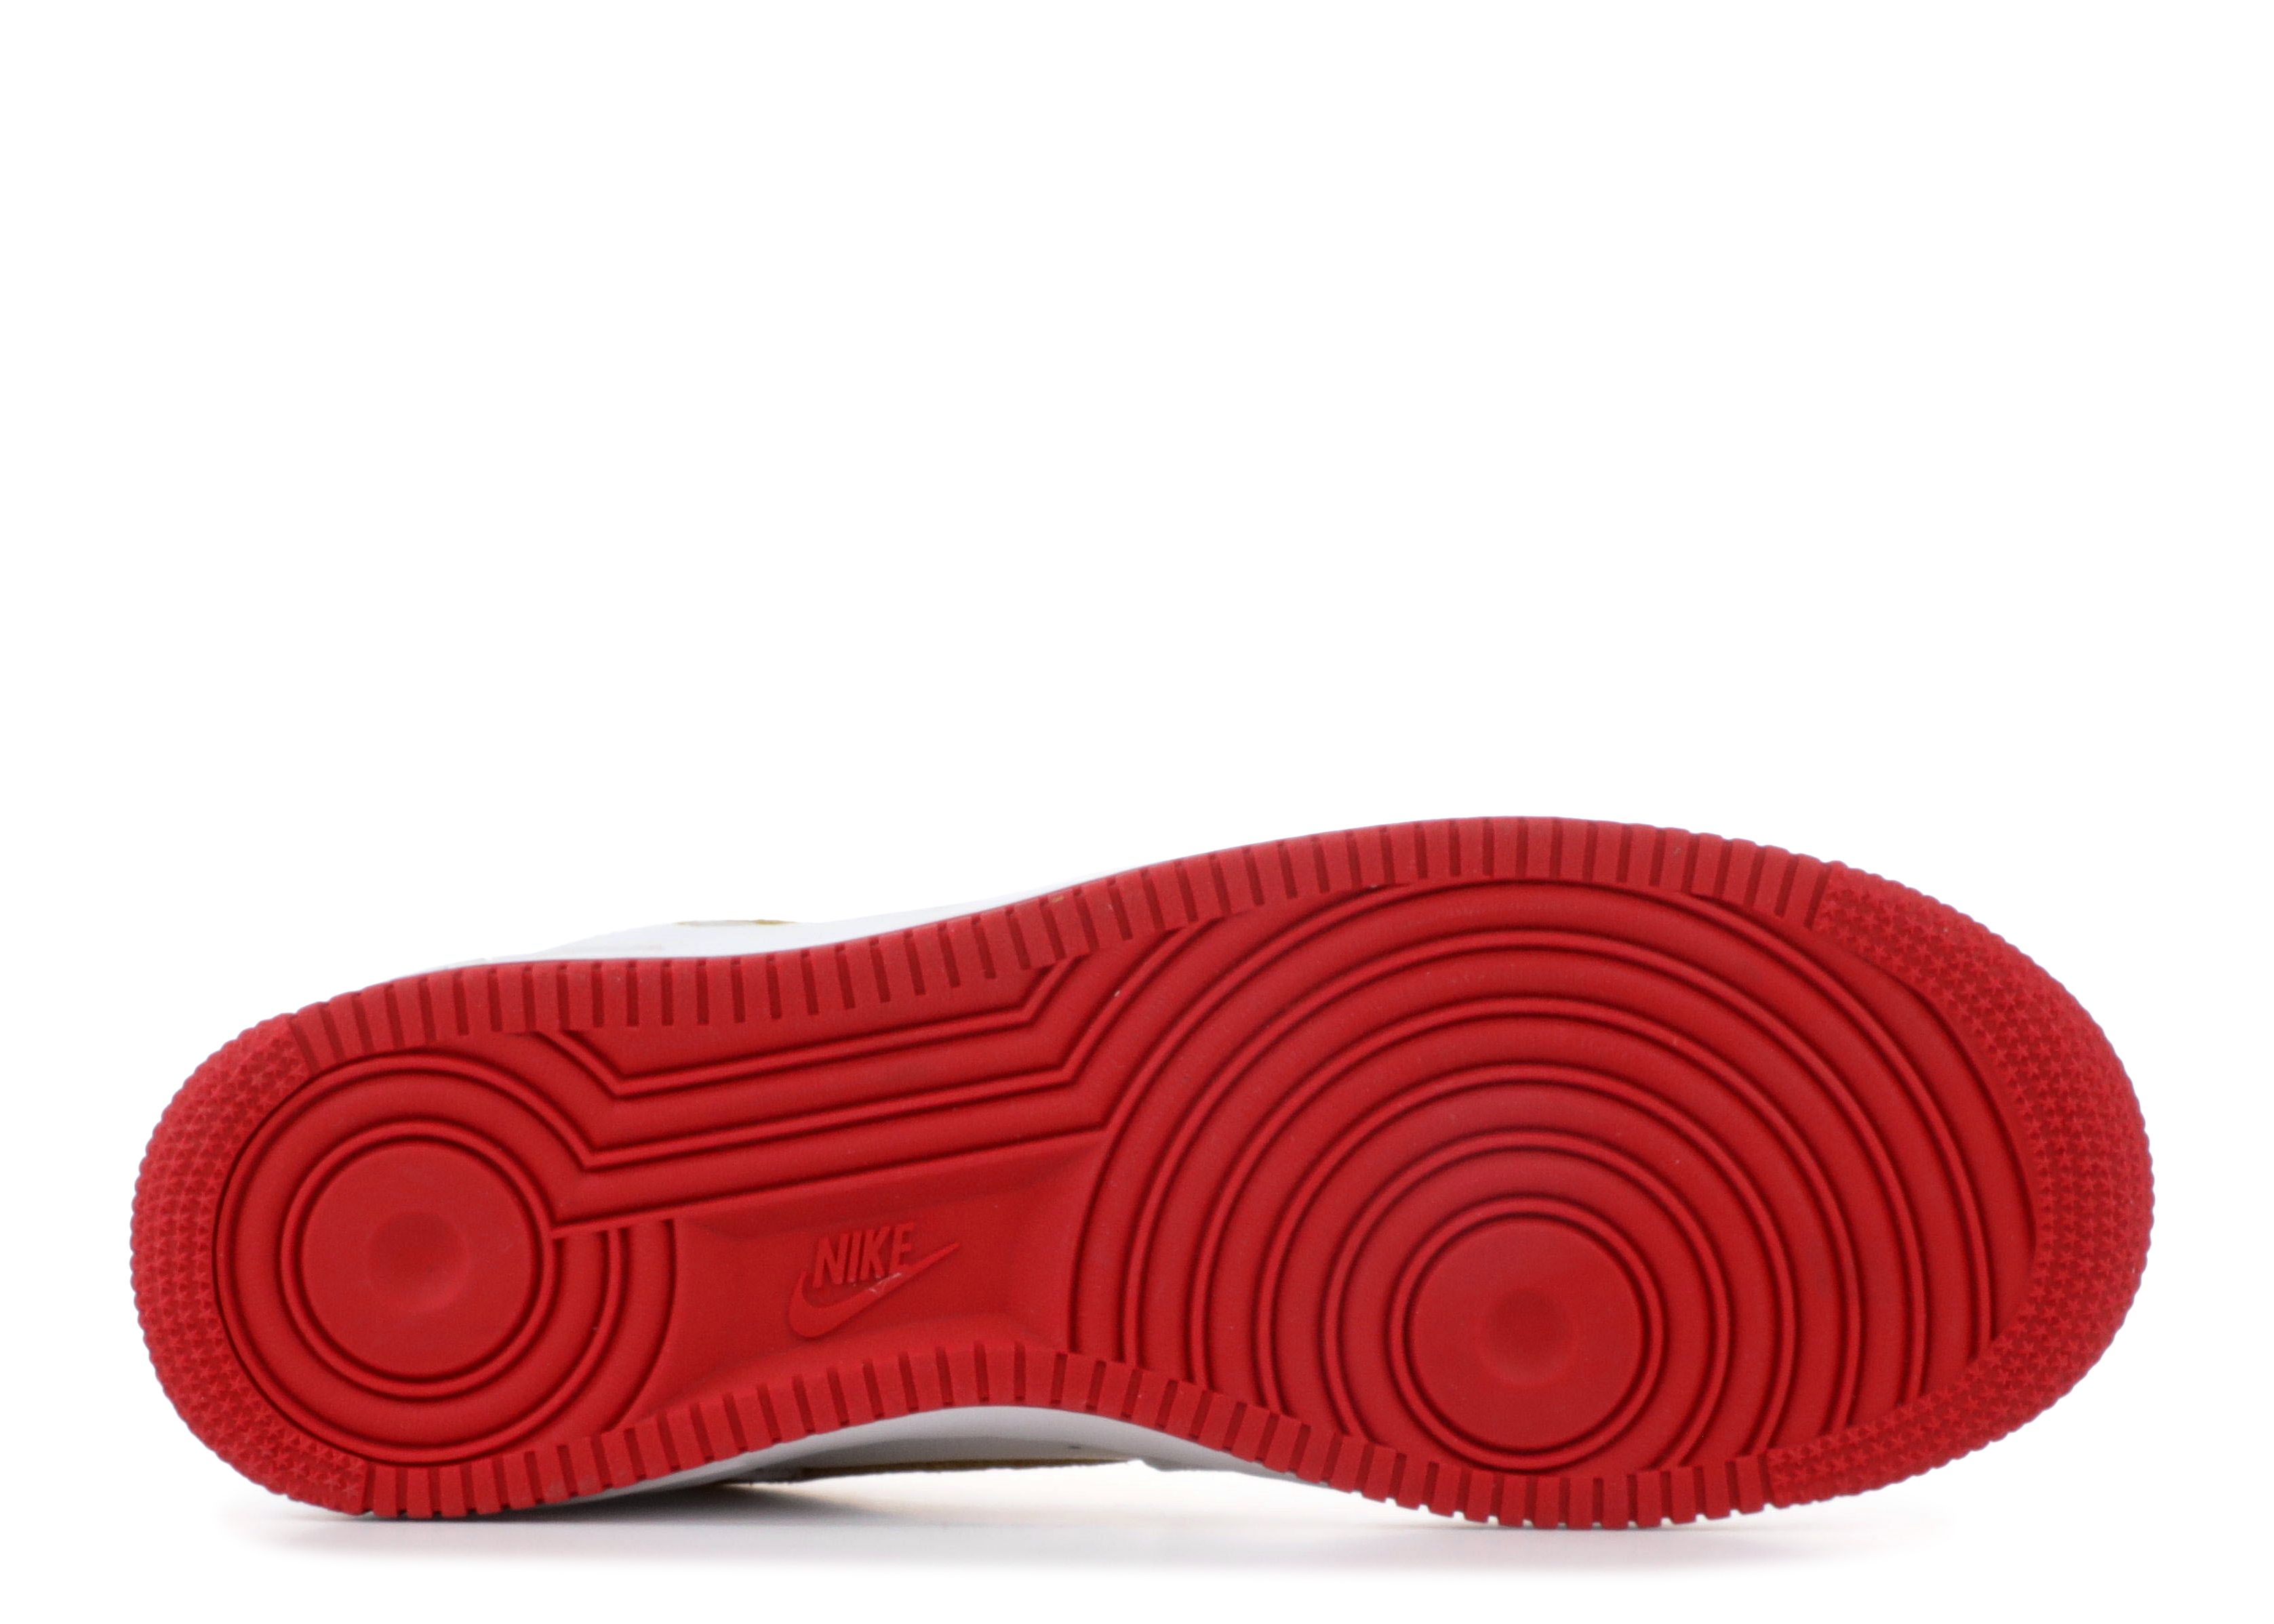 Air Force 3 High Premium - Nike - 313669 012 - black/white-ink-team red